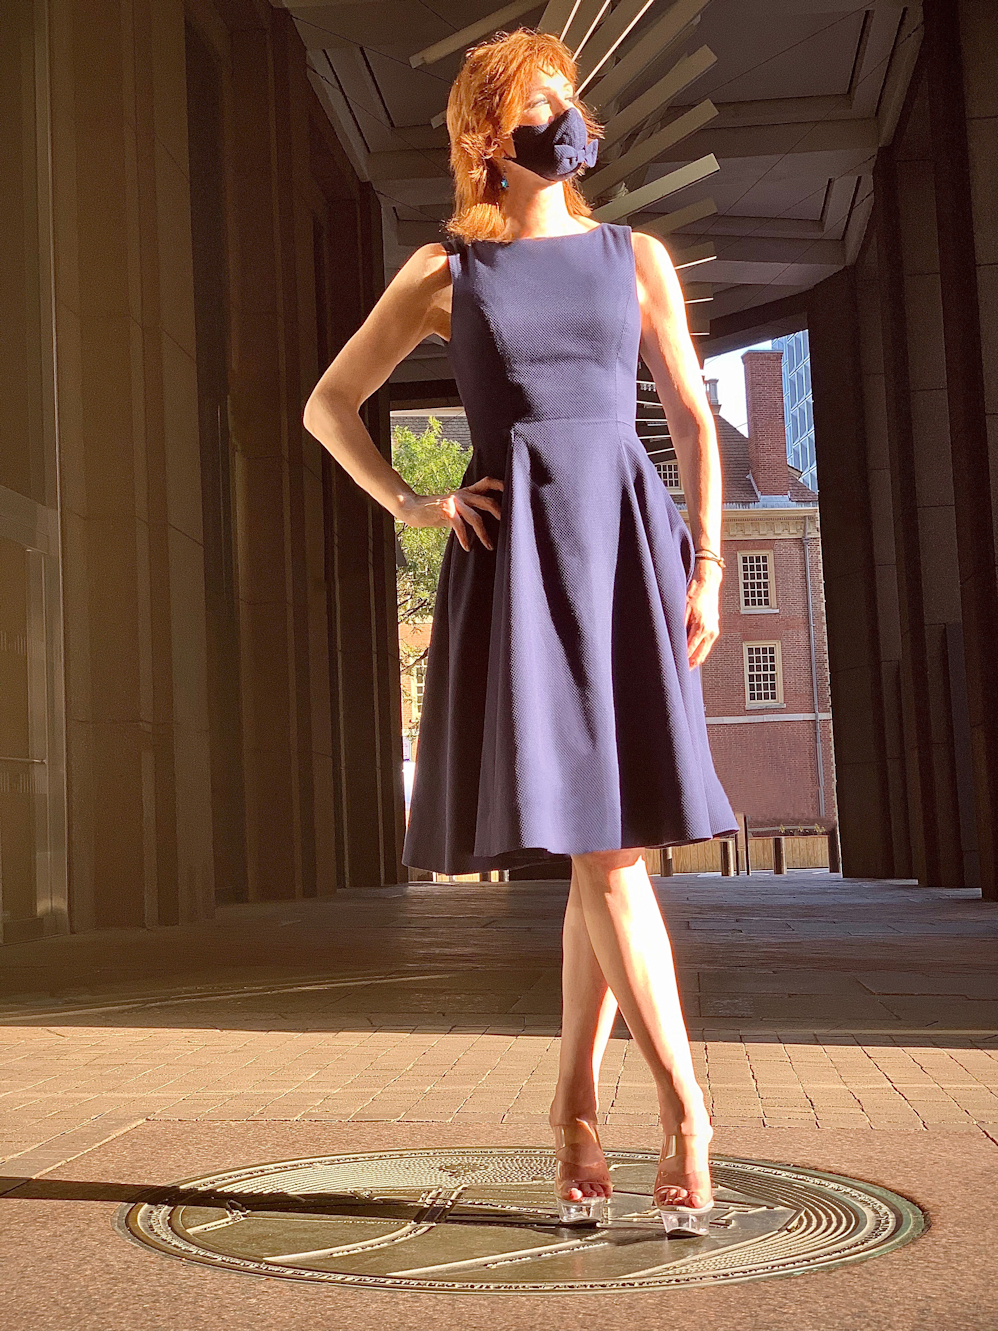 West Village Model Karen Rempel in Engineered by Andrea T bespoke dress - Karen's Quirky Style